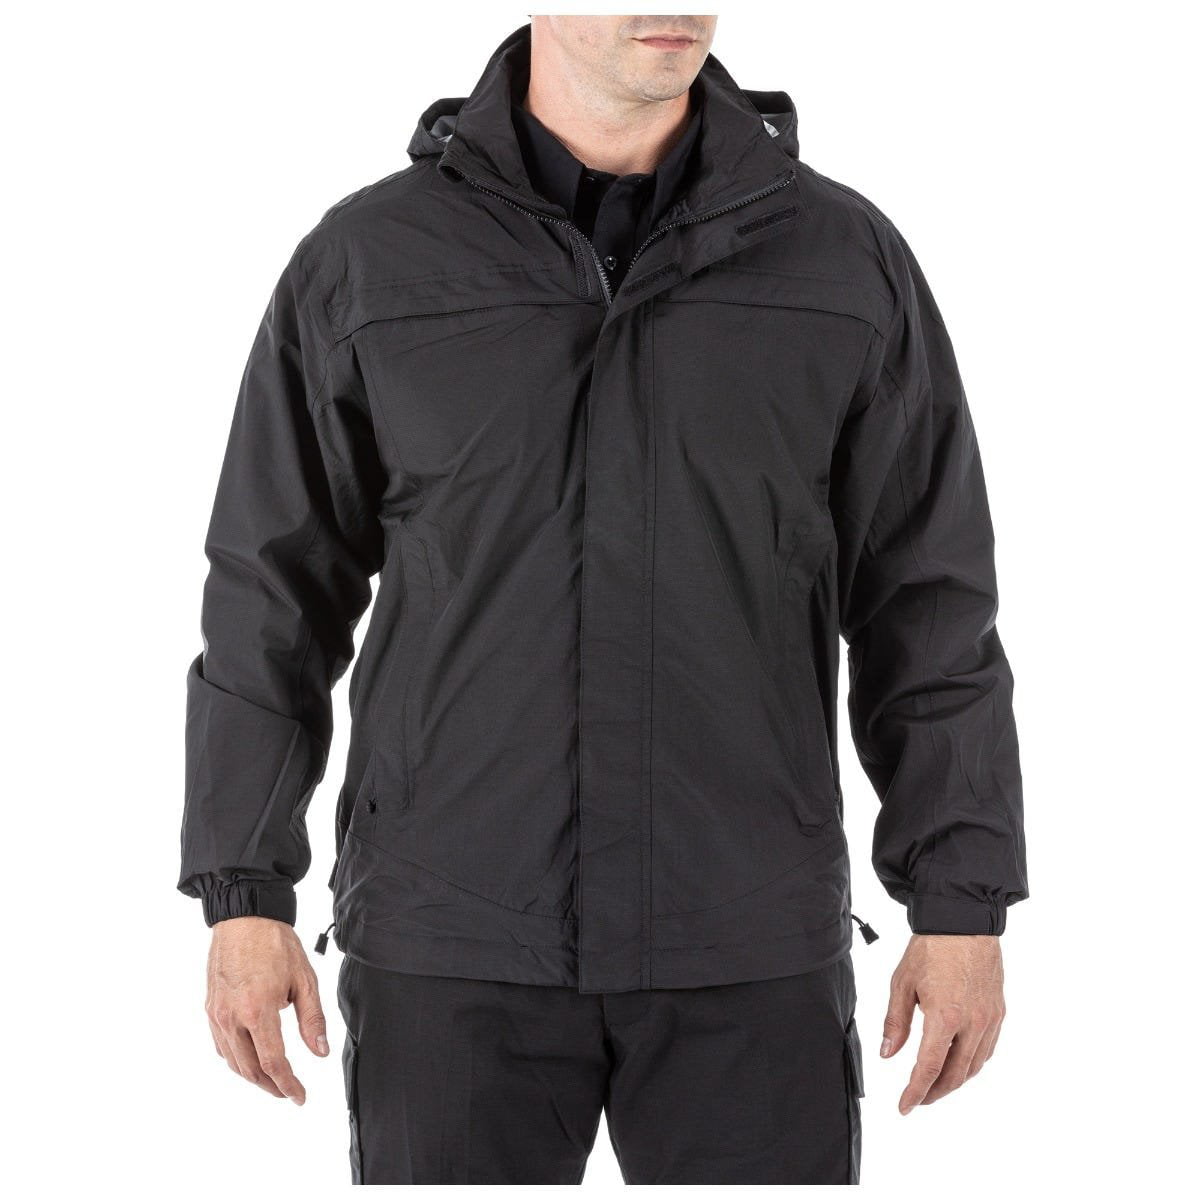 Tac Dry Rain Shell Jacket, Black - Walmart.com